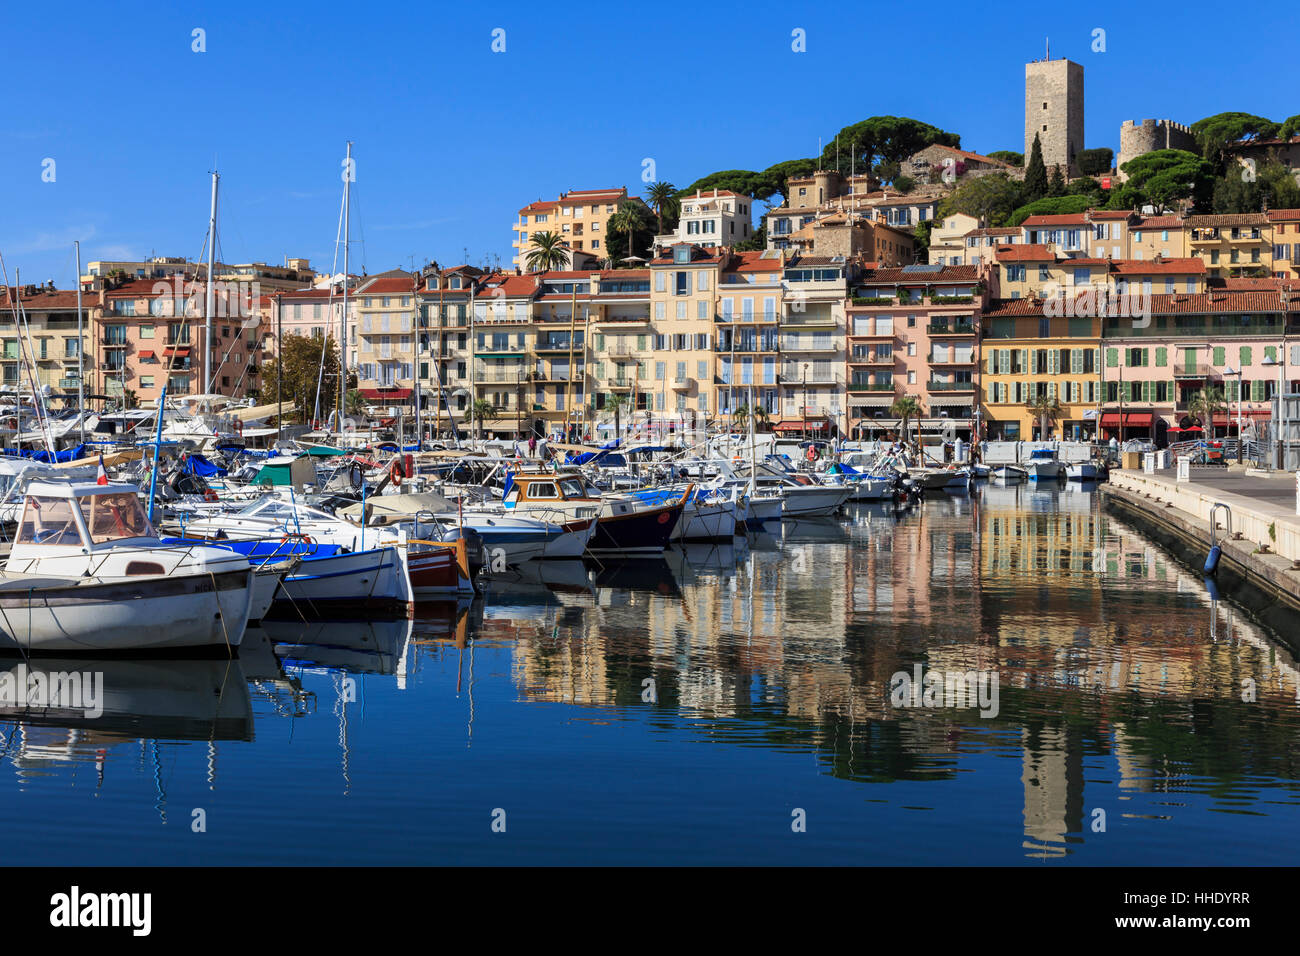 Reflections of boats and Le Suquet, Old (Vieux) port, Cannes, Cote d'Azur, Alpes Maritimes, Provences, France, Mediterranean Stock Photo